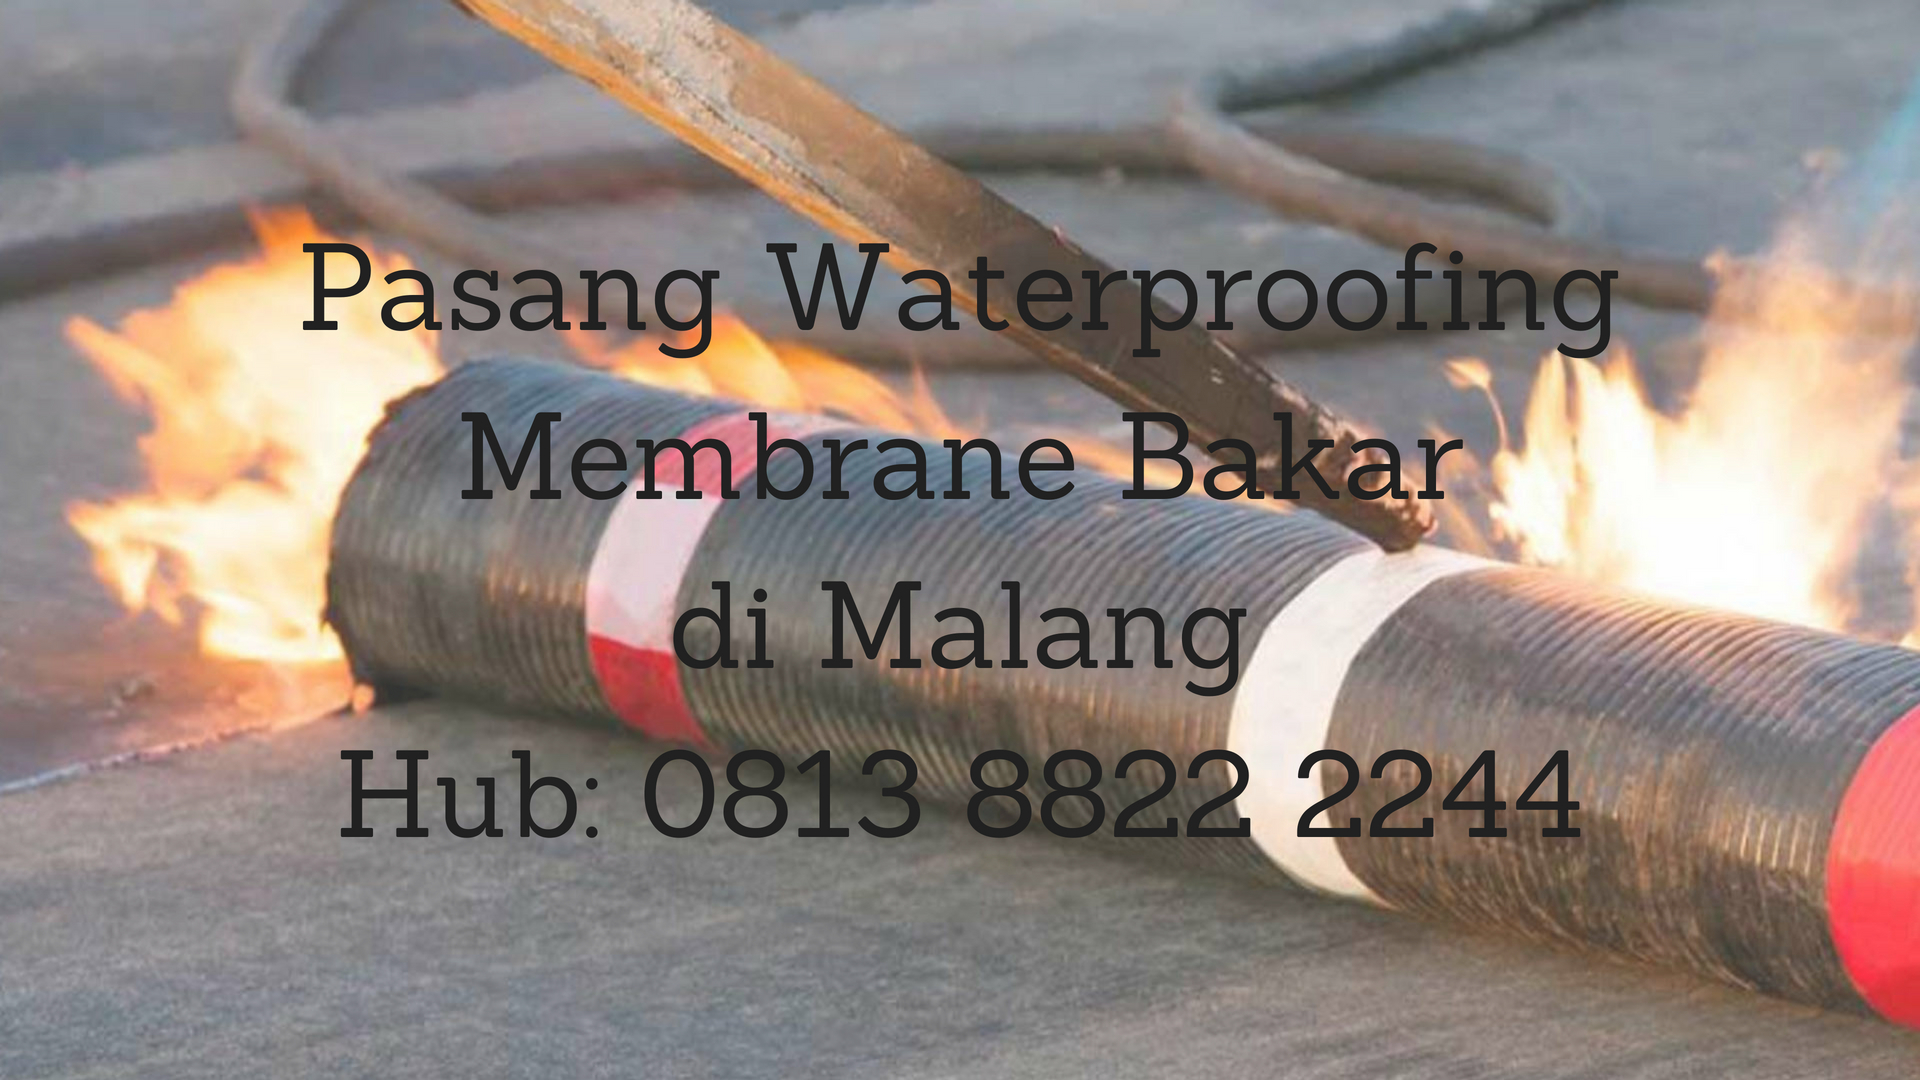 PASANG WATERPROOFING MEMBRANE BAKAR DI MALANG. HUB : 08138822 2244